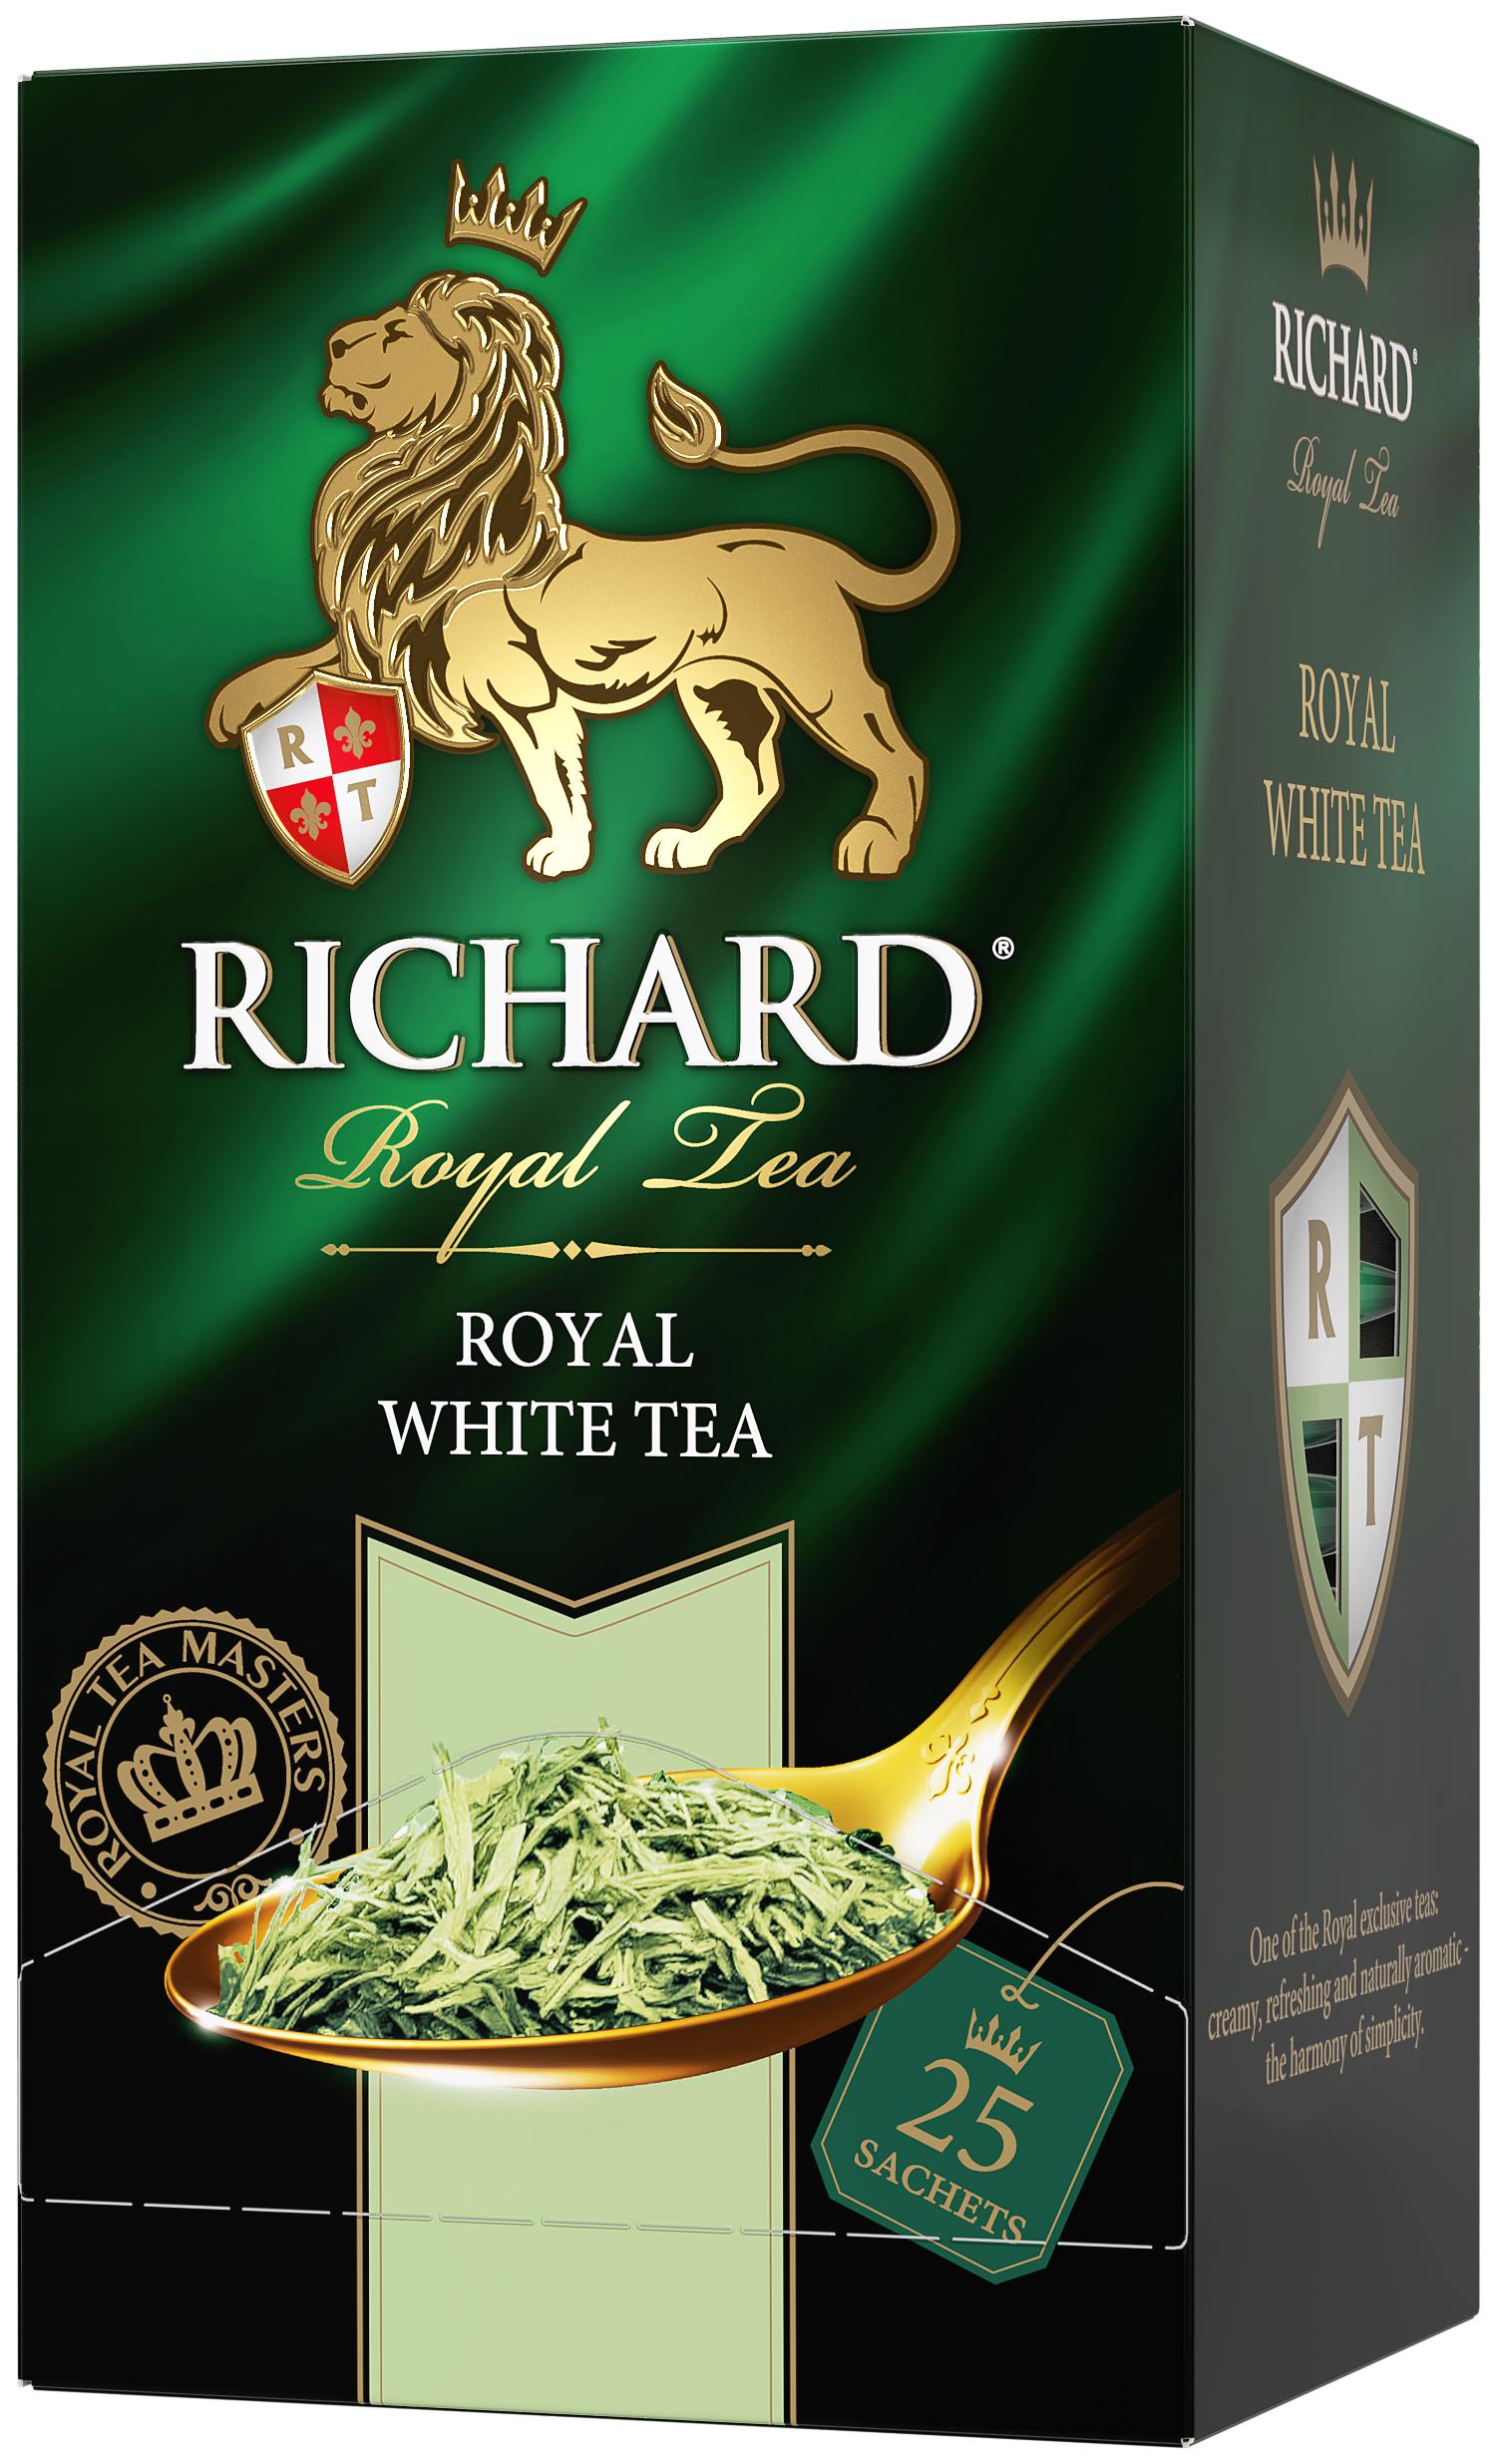 Richard "Royal White Tea" white, 25 sachet, 37.5g